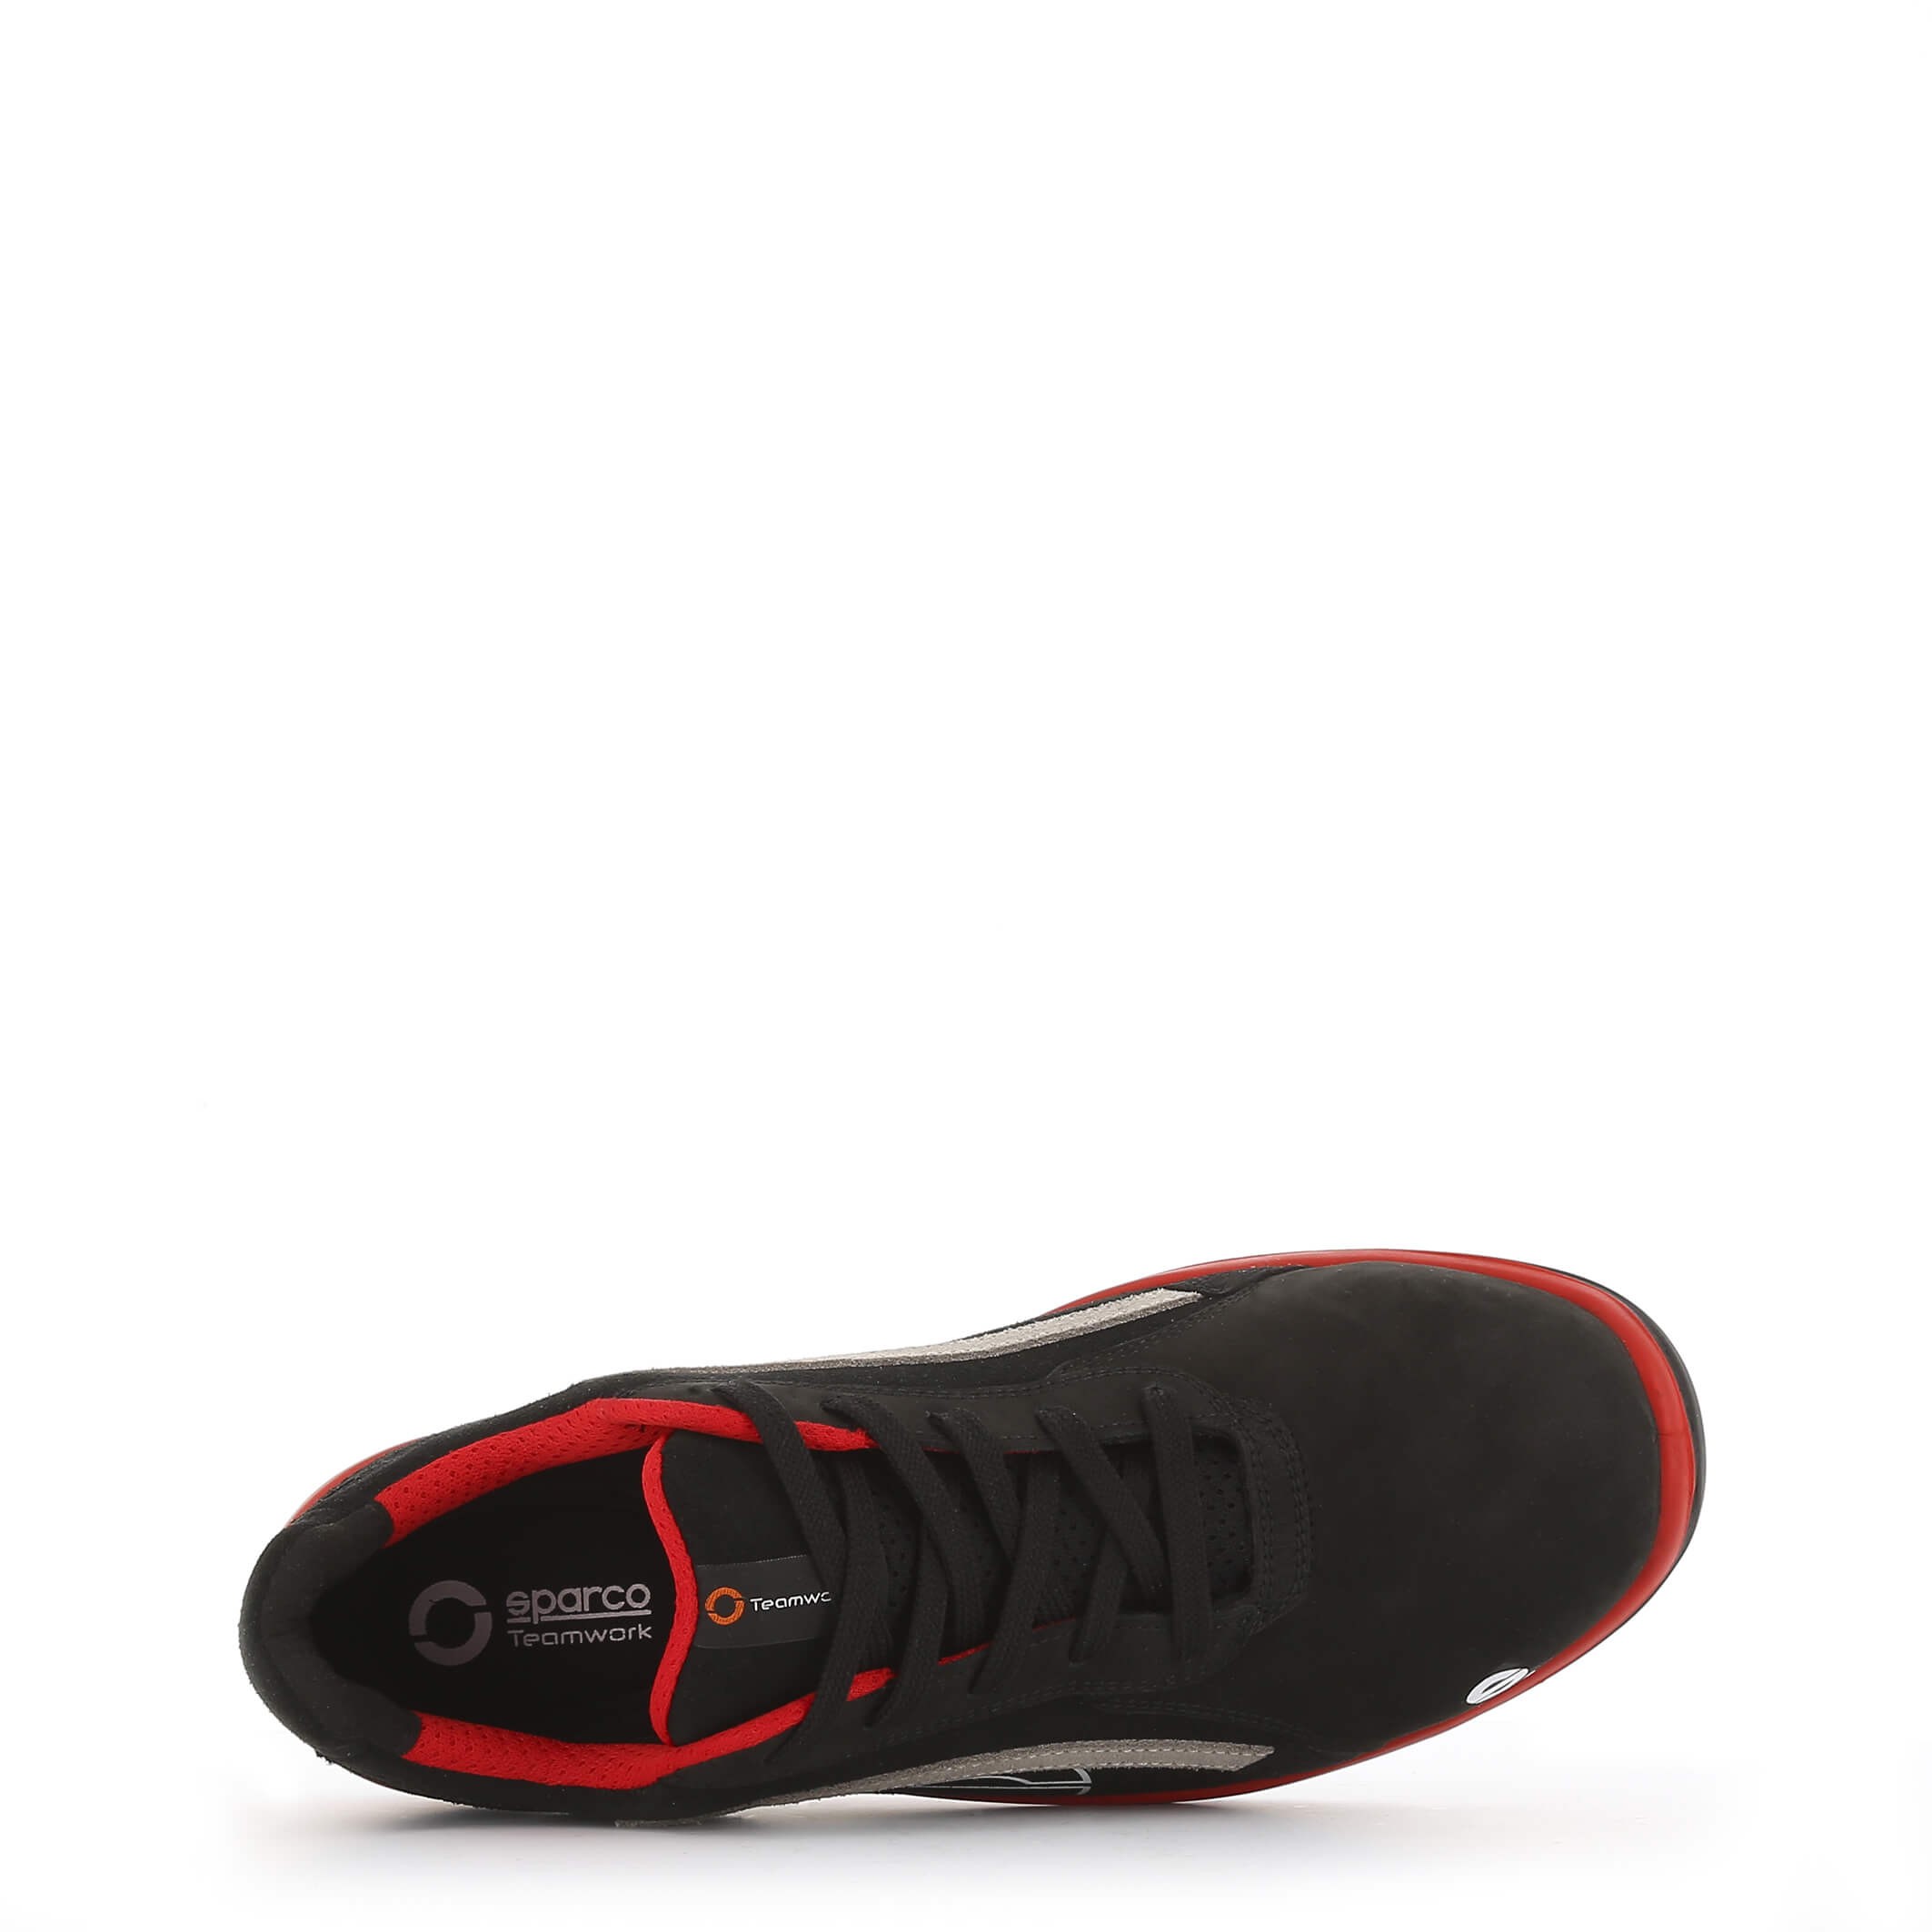 chaussure securite basse Sport evo noir rouge S3 Sparco cotepro vue 2